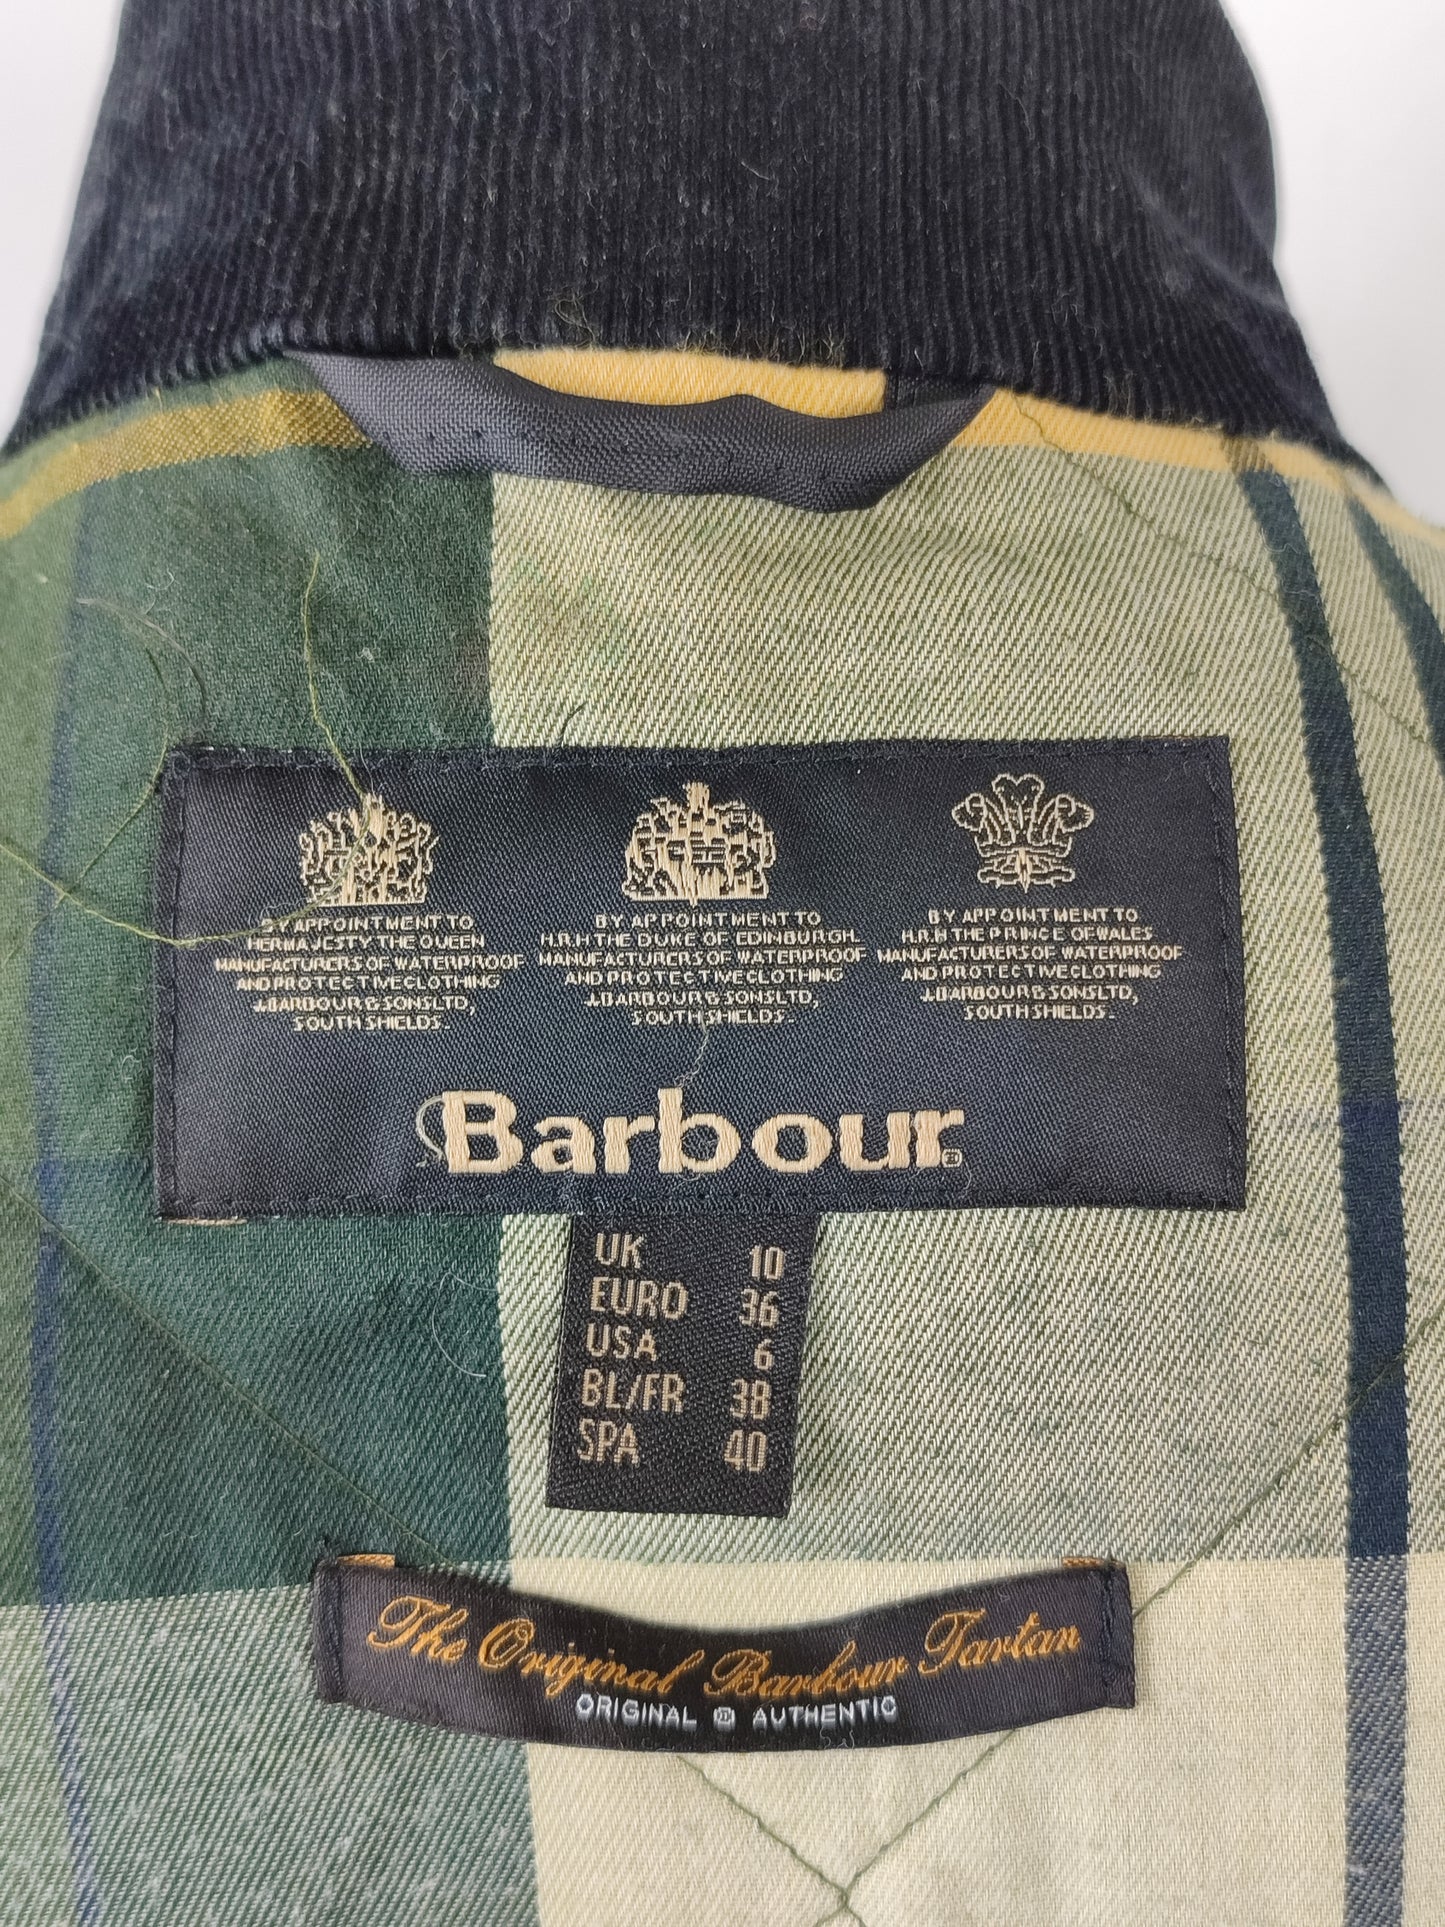 Giacca Barbour Nera cerata da donna UK10 small - Lady Stoneleigh Black wax coat size UK10